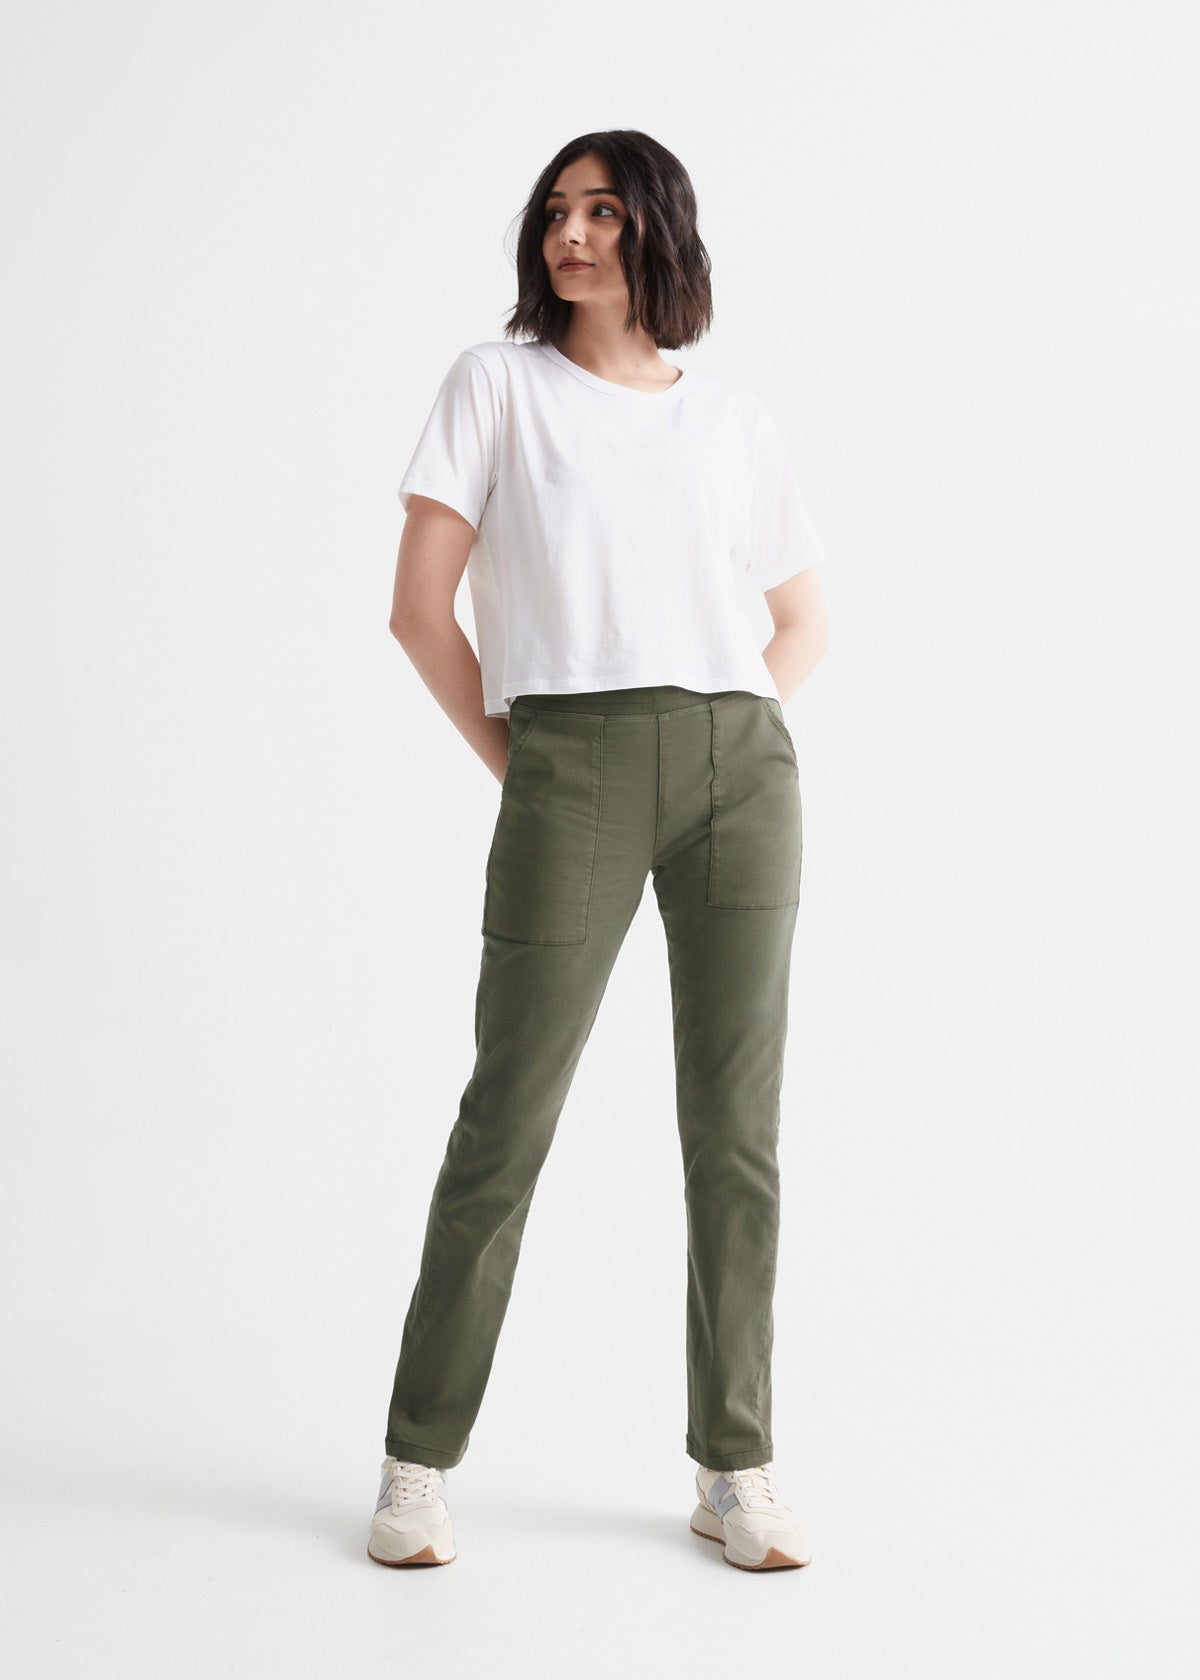 Women's Green Sweatpant Full Body